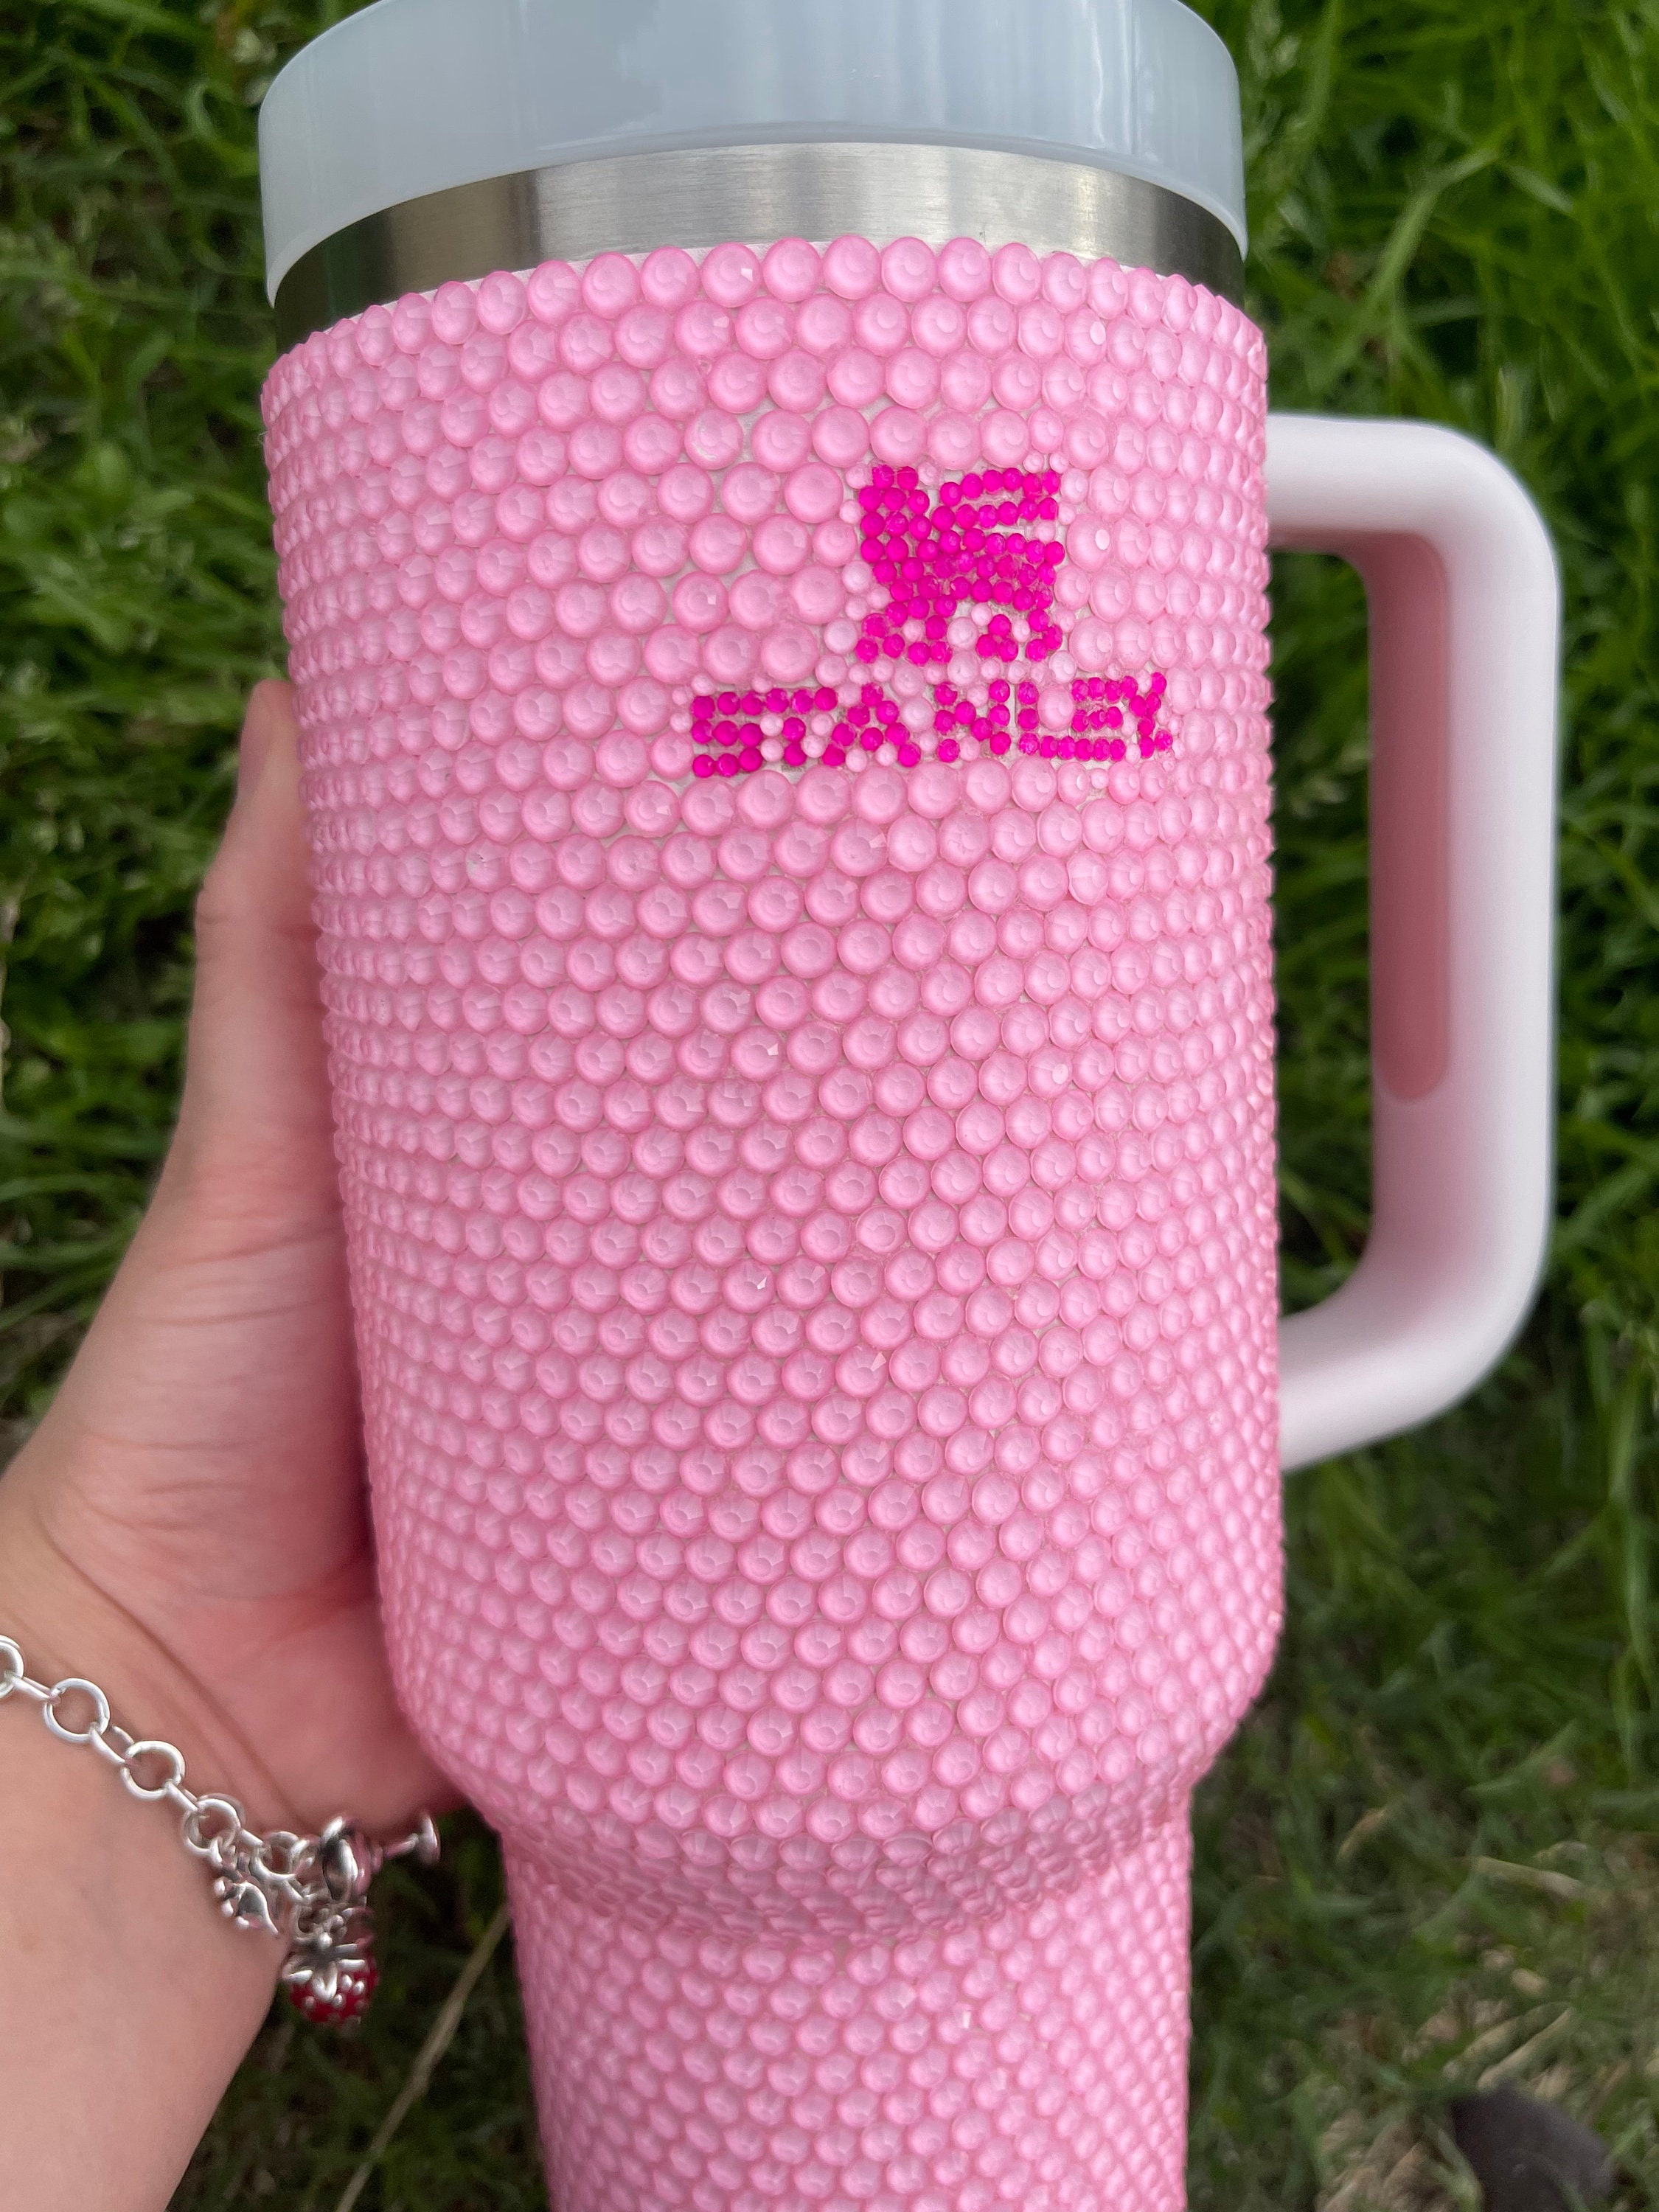 Its beautiful #stanley #stanleycup #stanleytumbler #pink